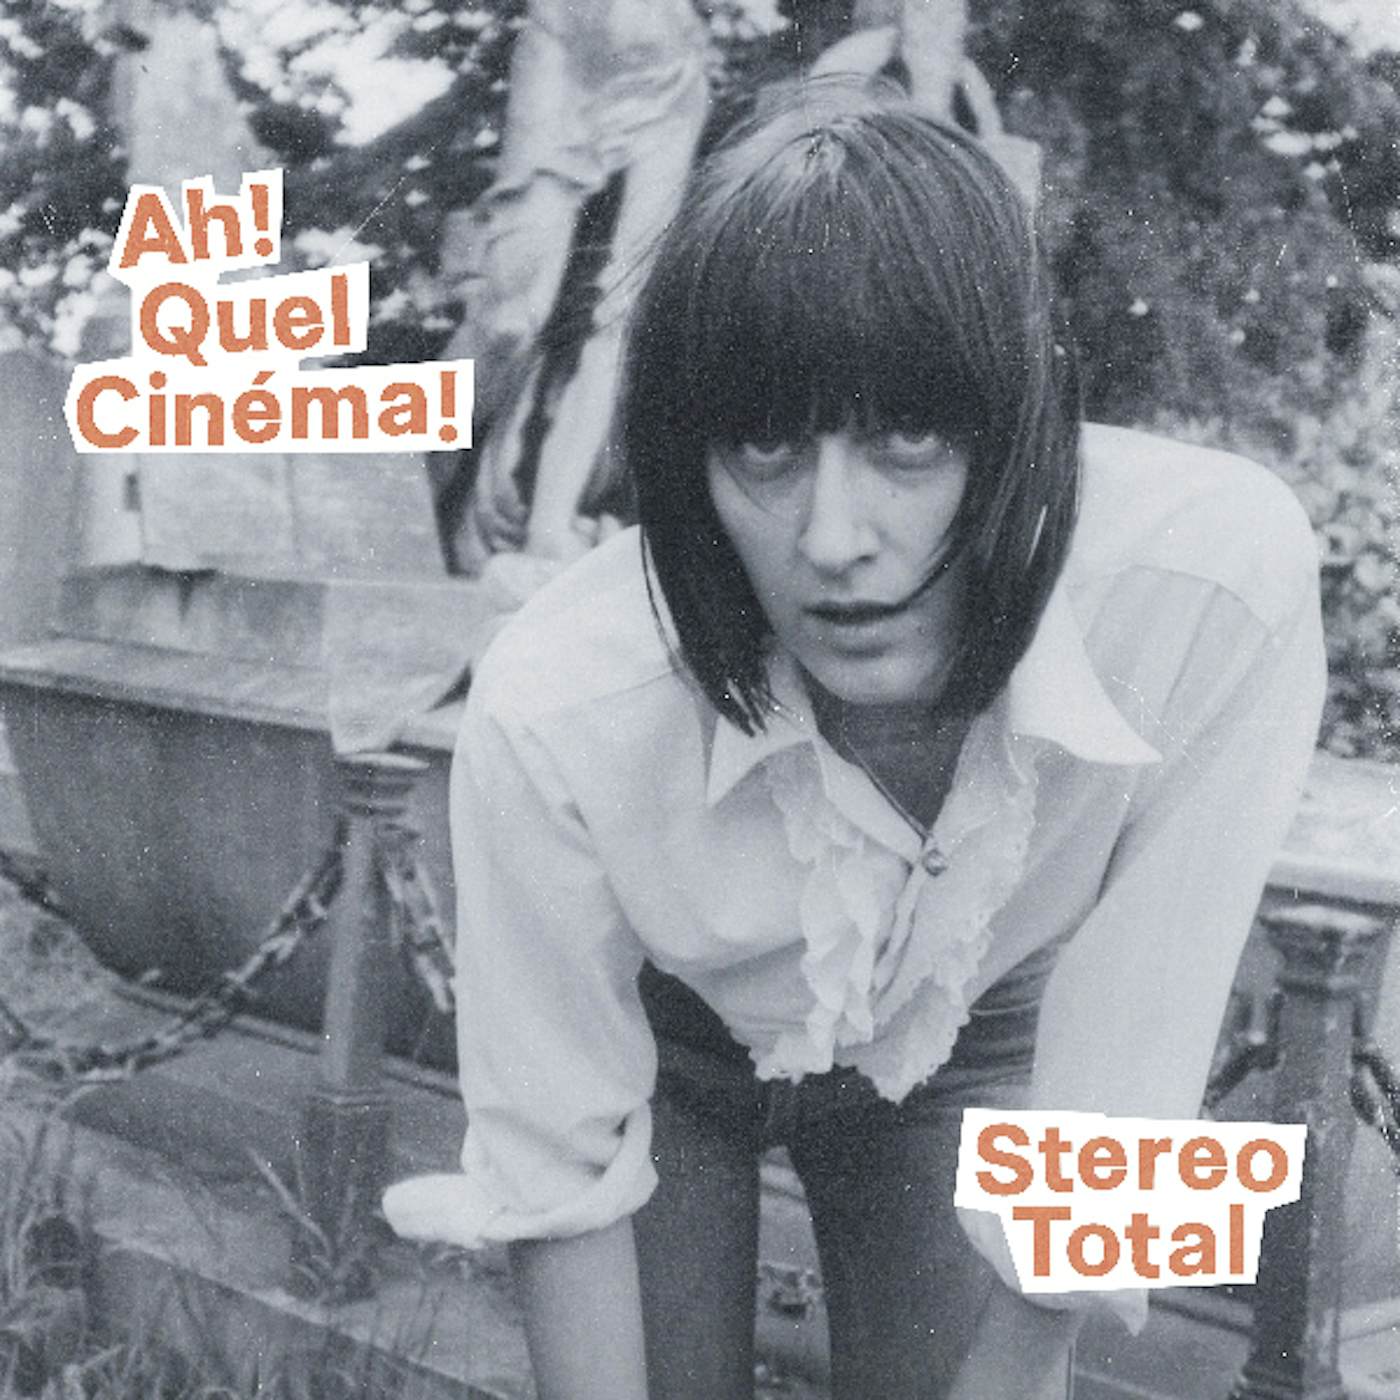 Stereo Total AH QUEL CINEMA Vinyl Record